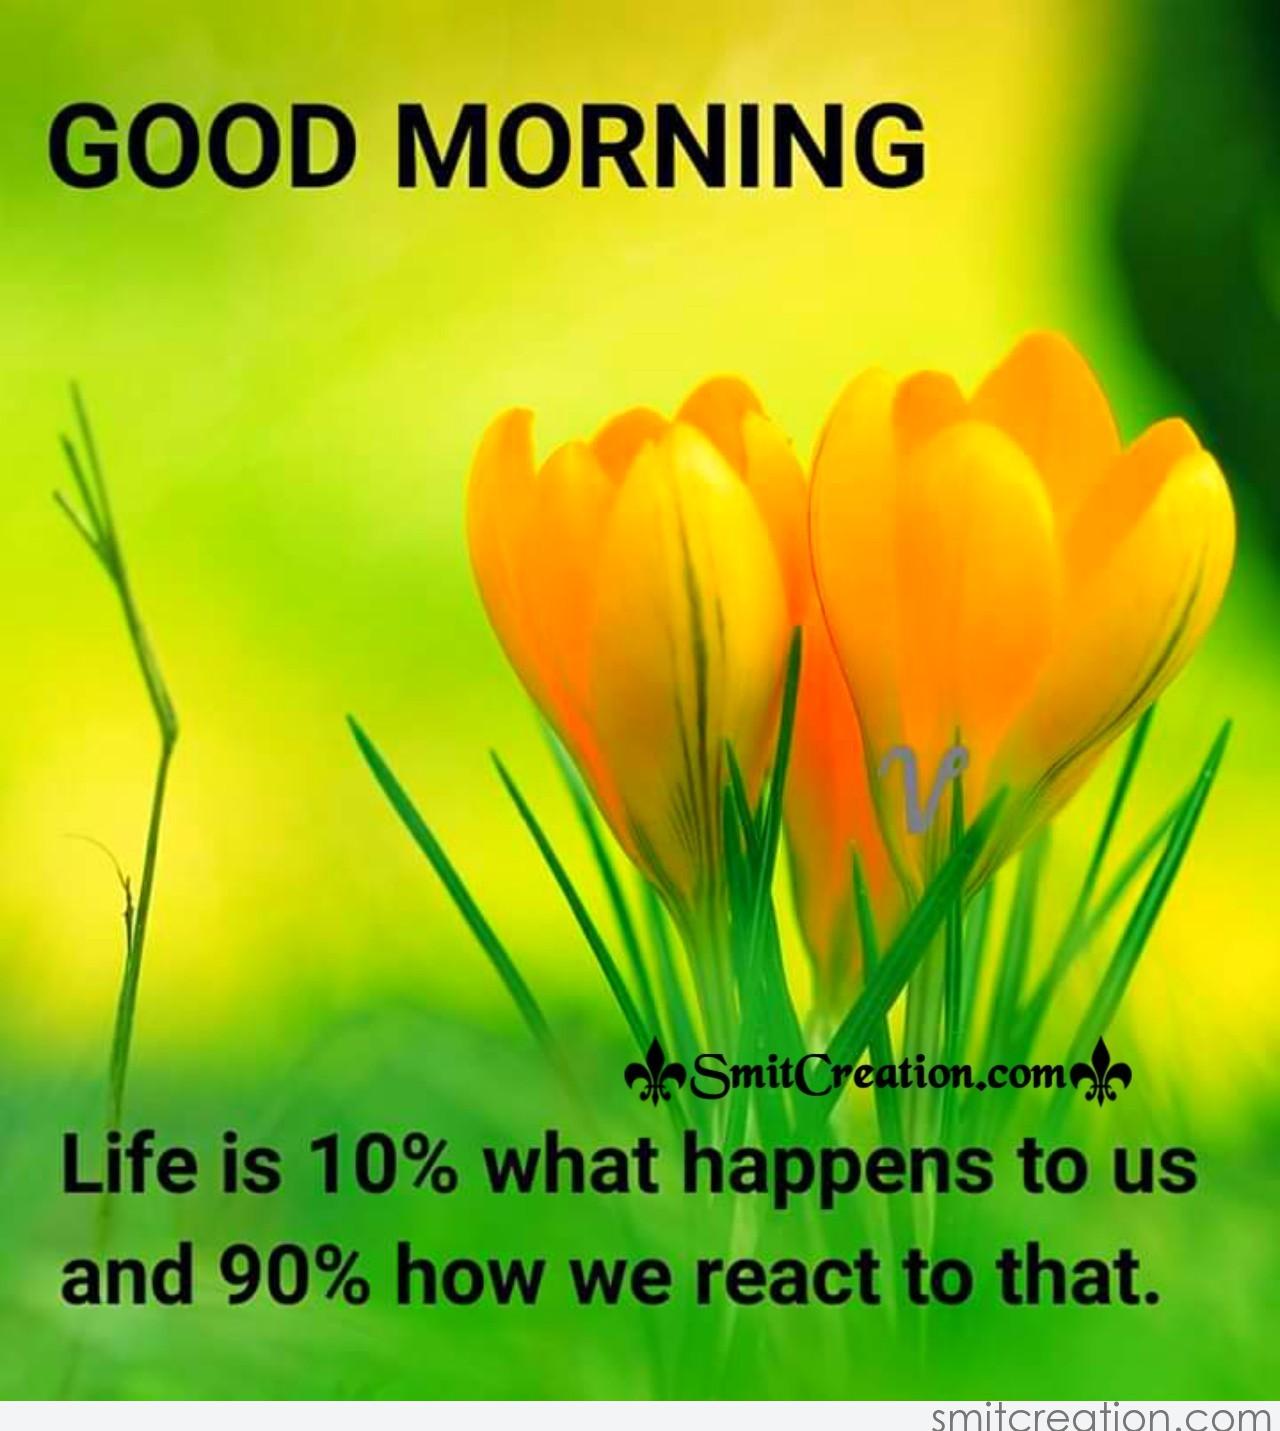 Good Morning Life Is 10 Percent - SmitCreation.com